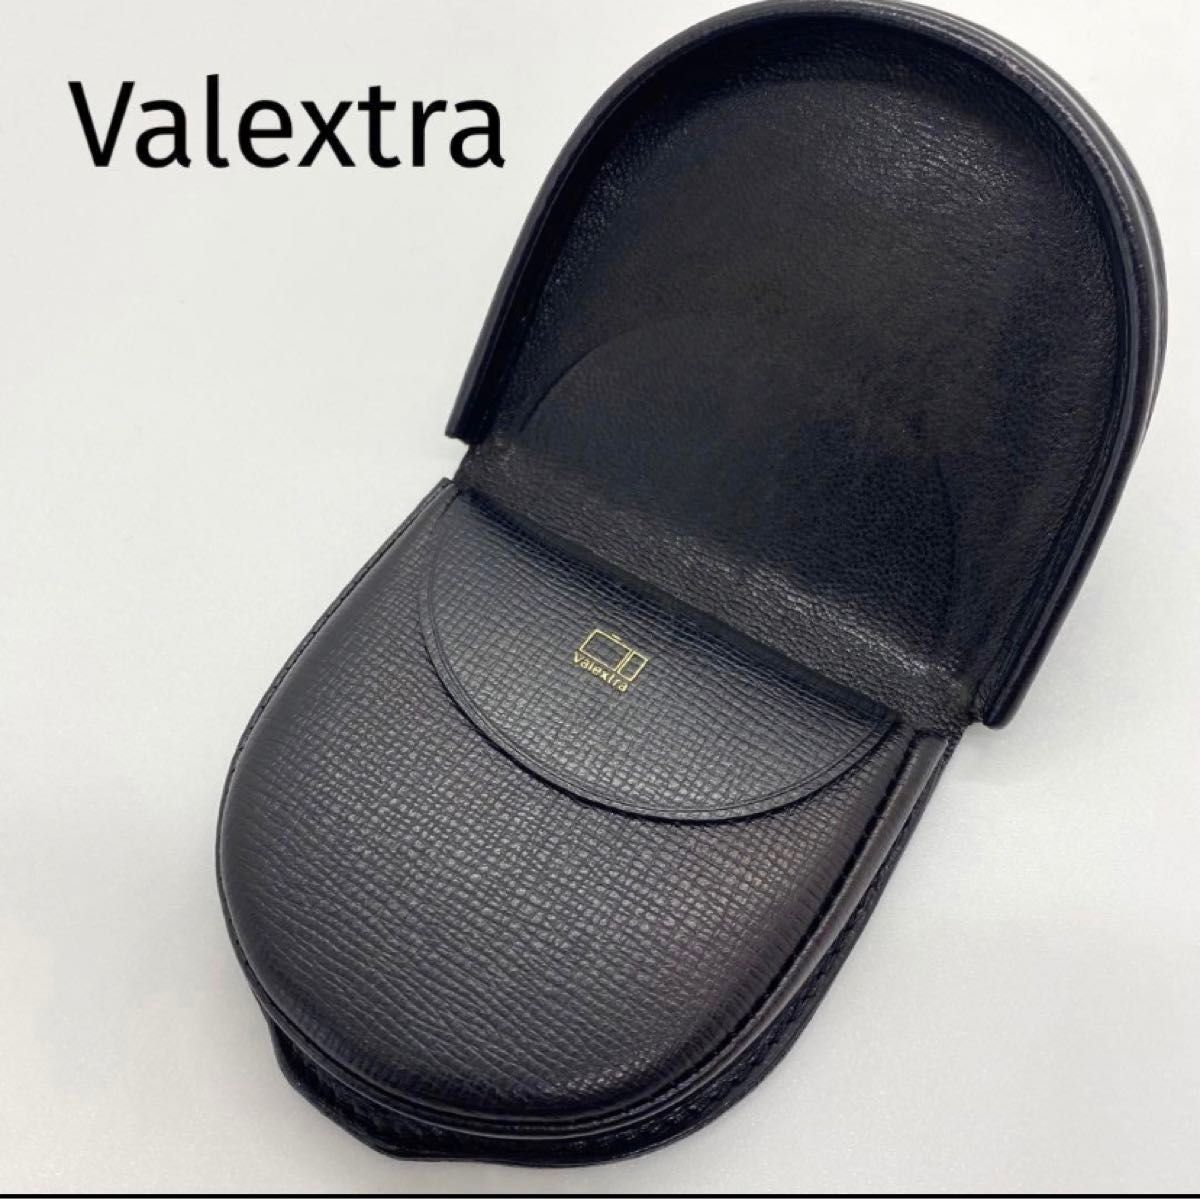 Valextra ヴァレクストラ コインケース ブラック 黒 レザー 財布 小銭入れ 希少 レア 美品 メンズ レディース 高級